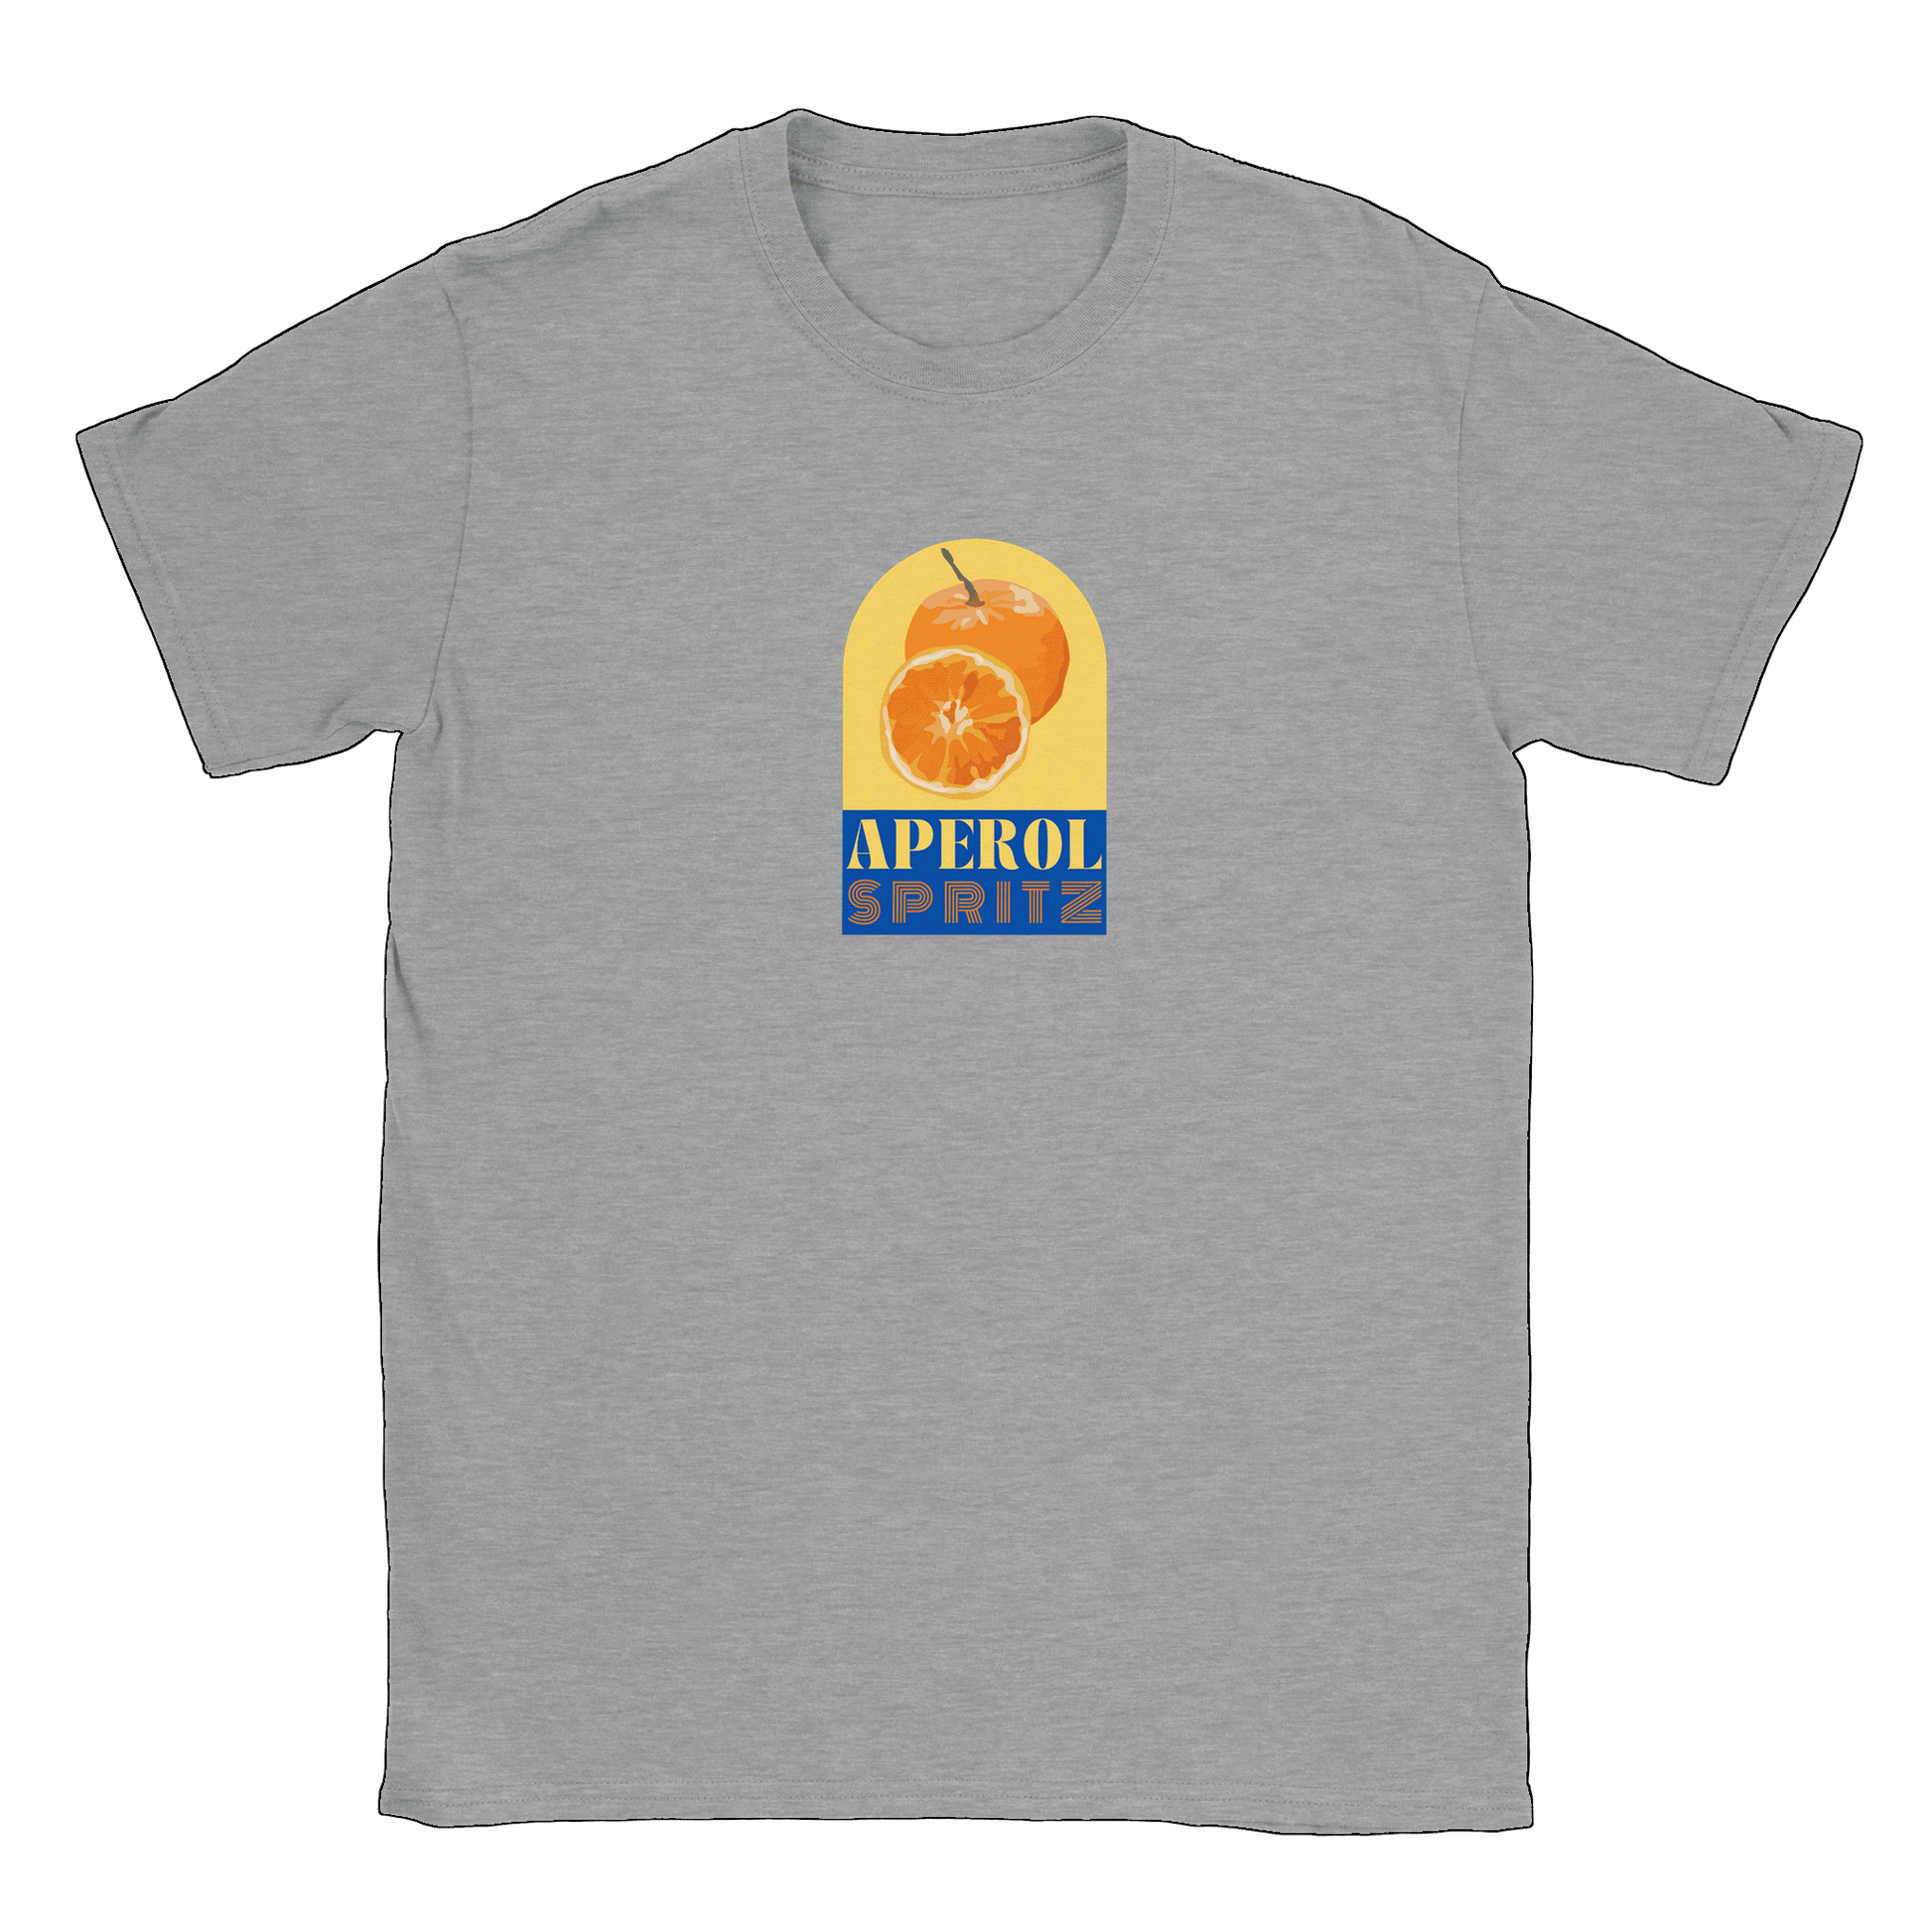 Aperol Spritz - T-shirt Sports Grey